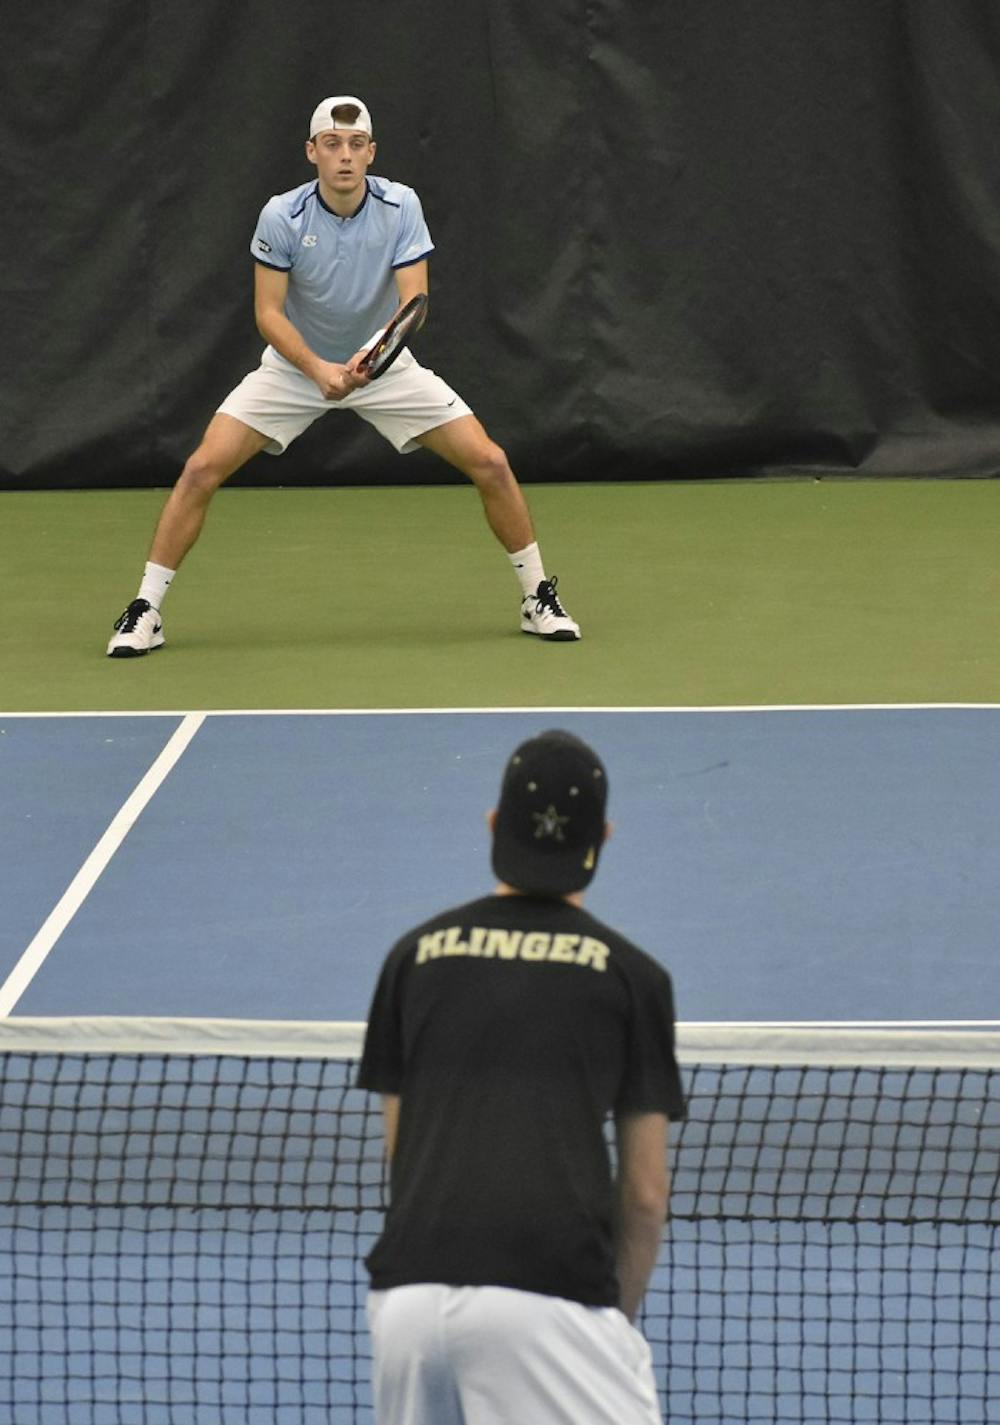 UNC men's tennis player Robert Kelly prepares to receive a serve against Vanderbilt.